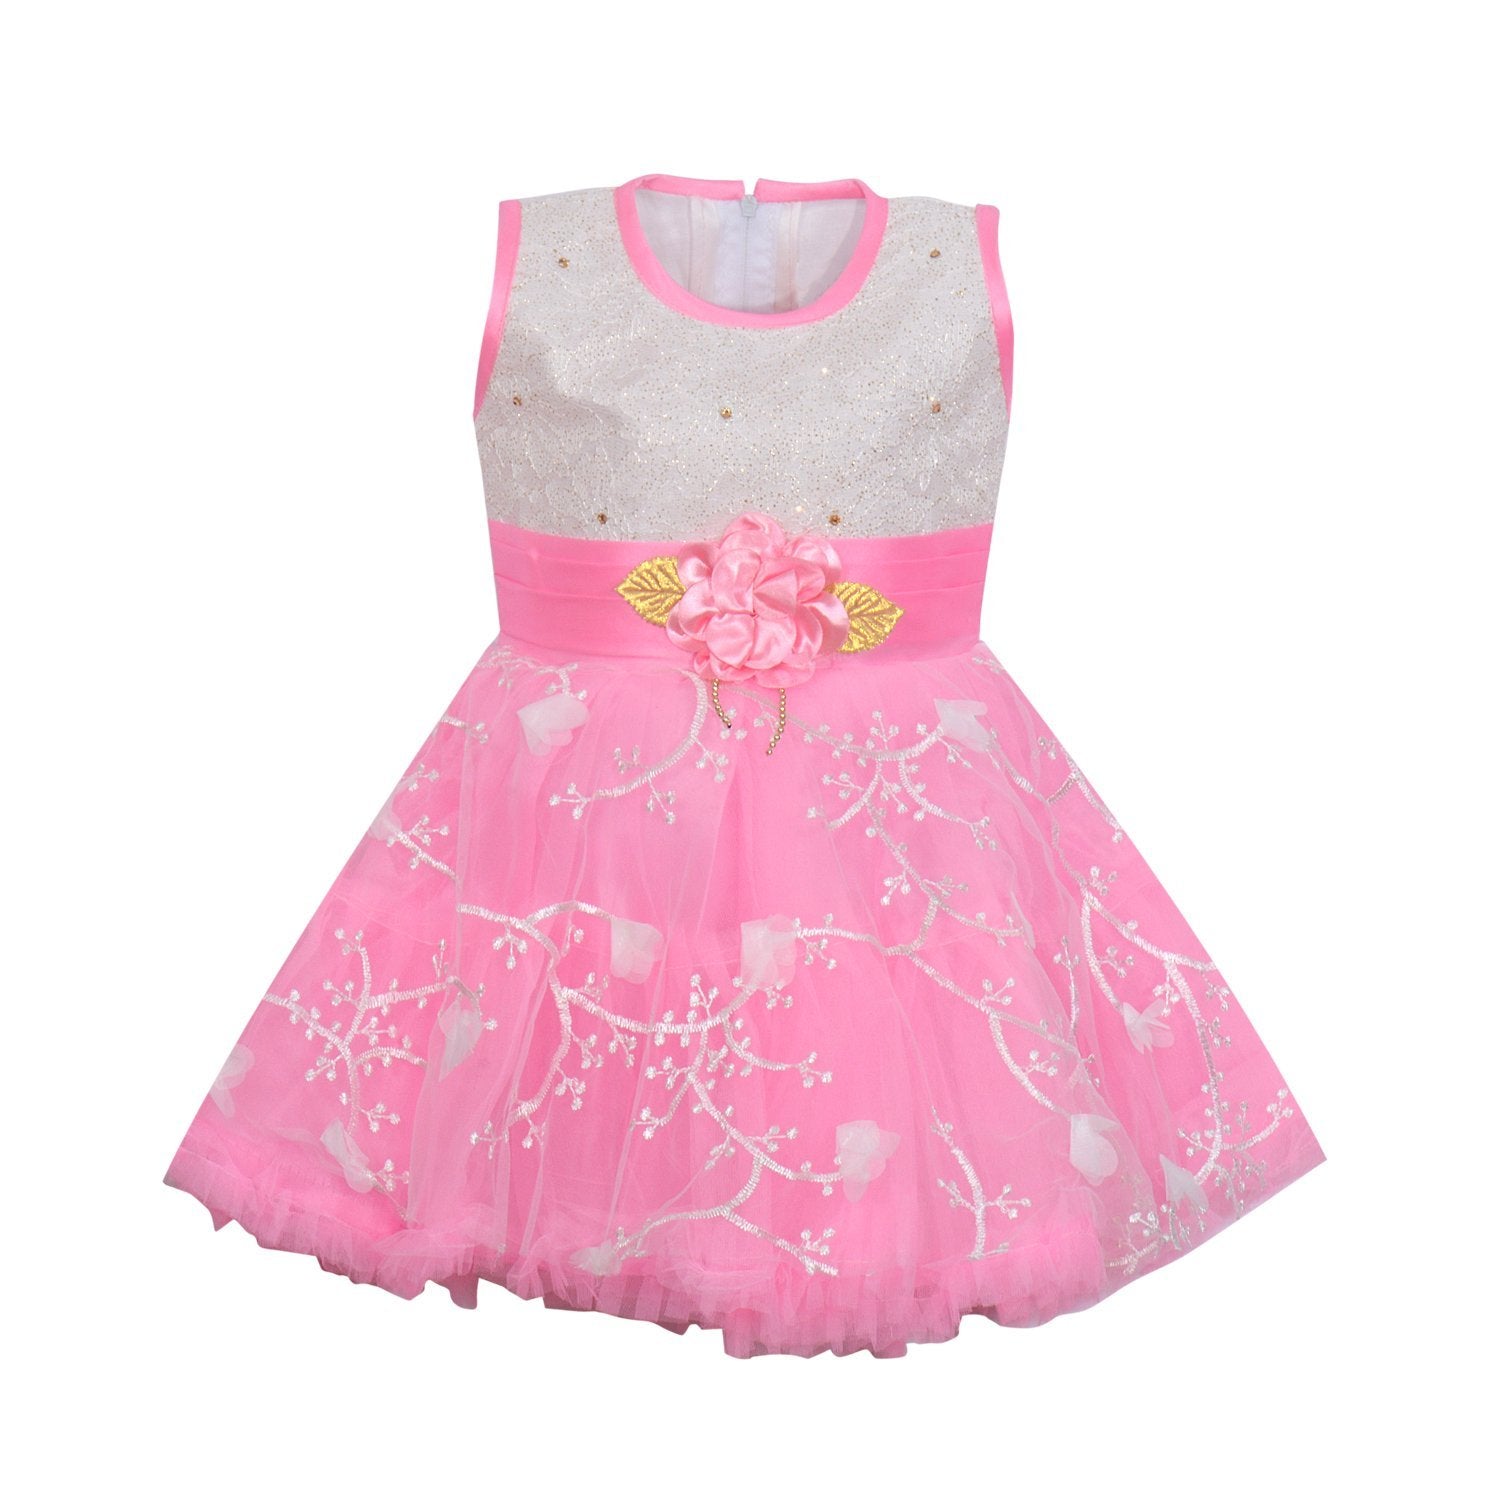 Baby Girls Party Wear Frock Dress fe2172bpnk -  Wish Karo Dresses